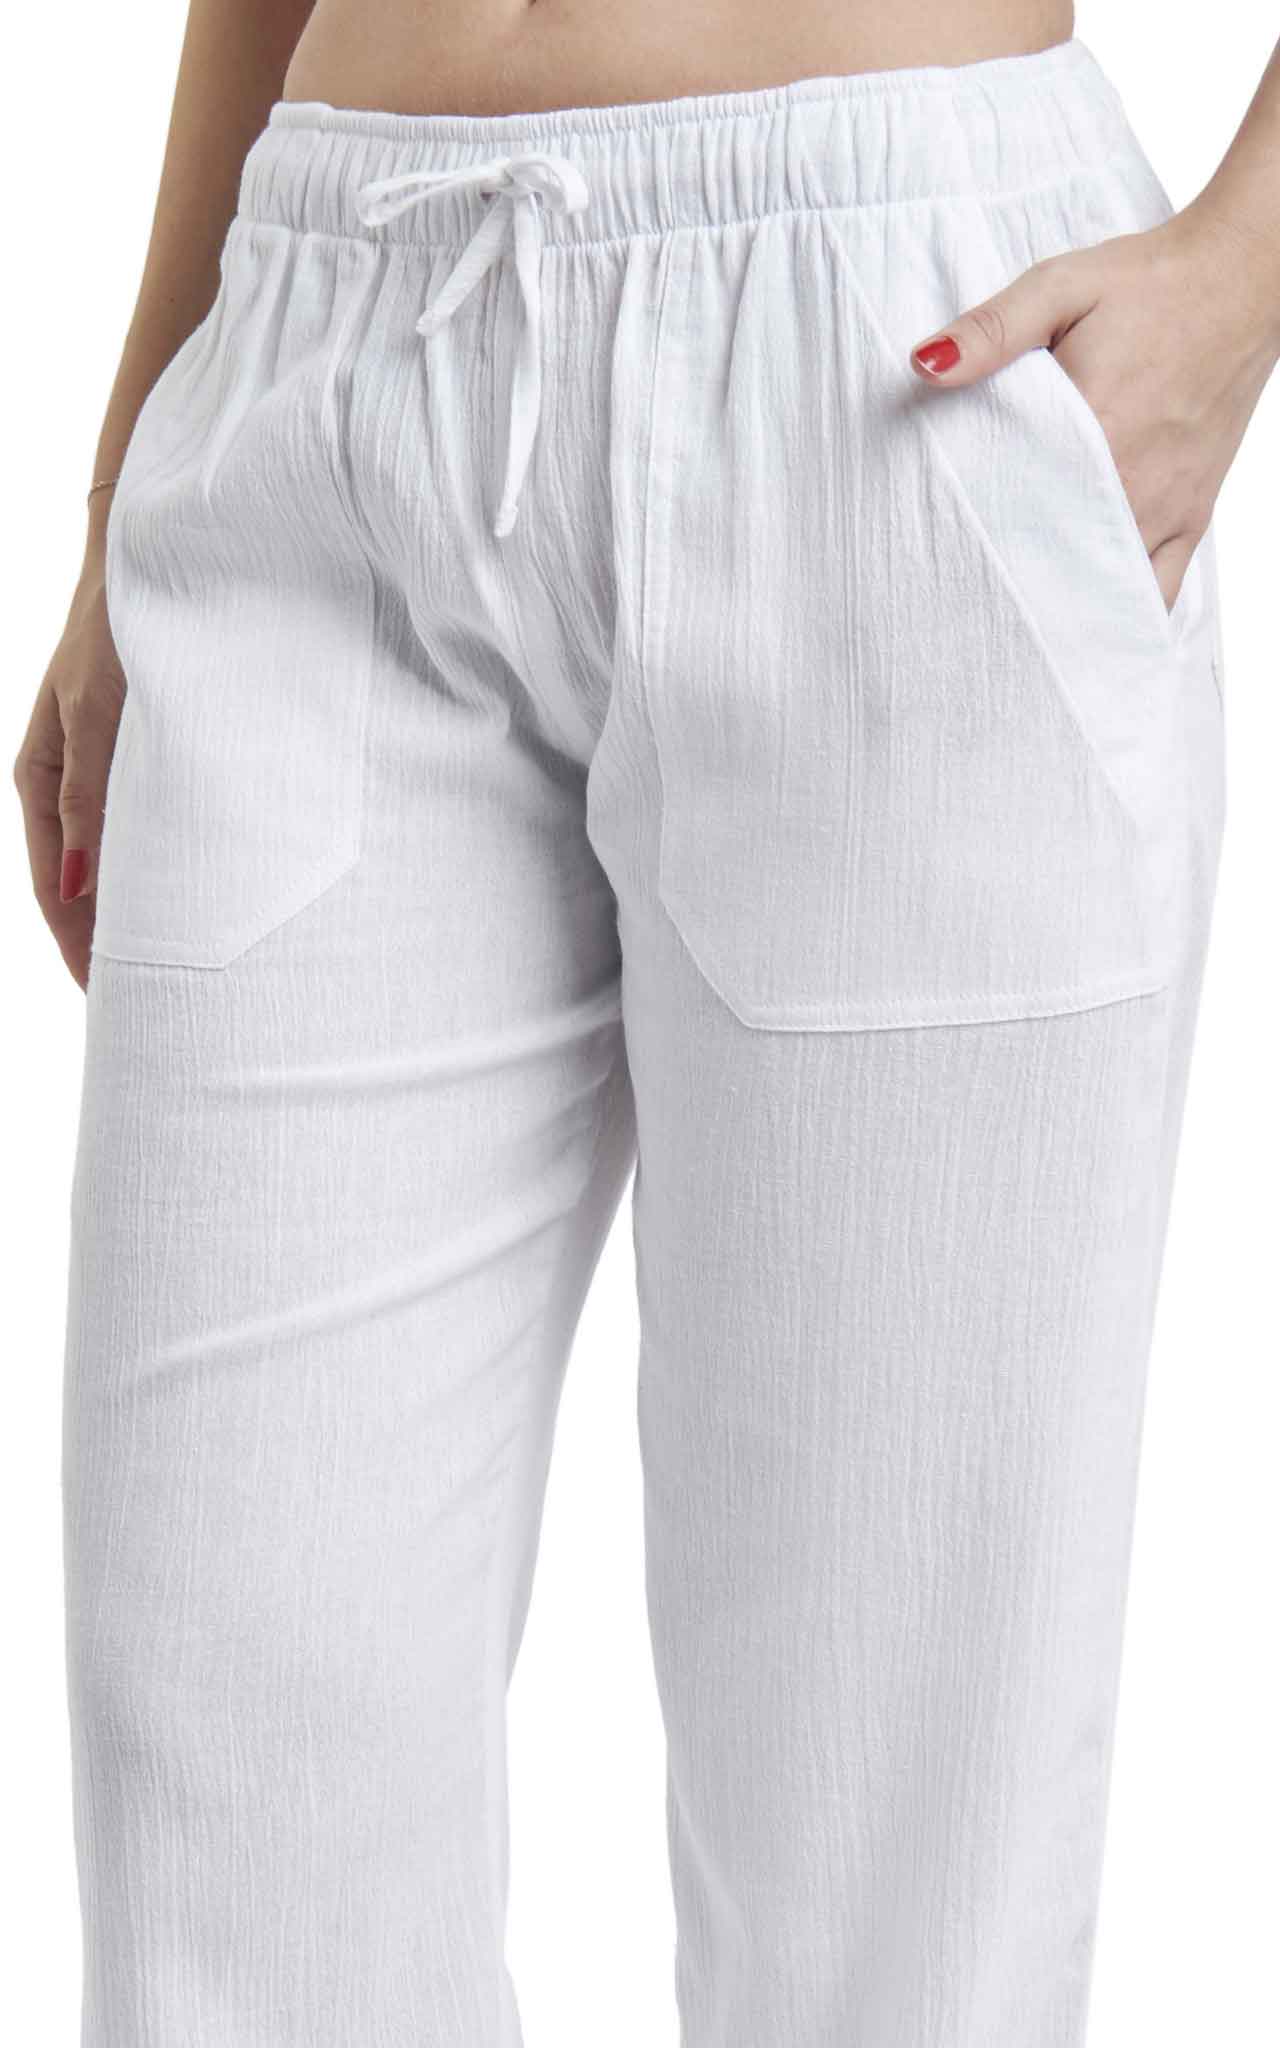 Women's Gauze Cotton PJ & Beach Pants with Pockets (White)